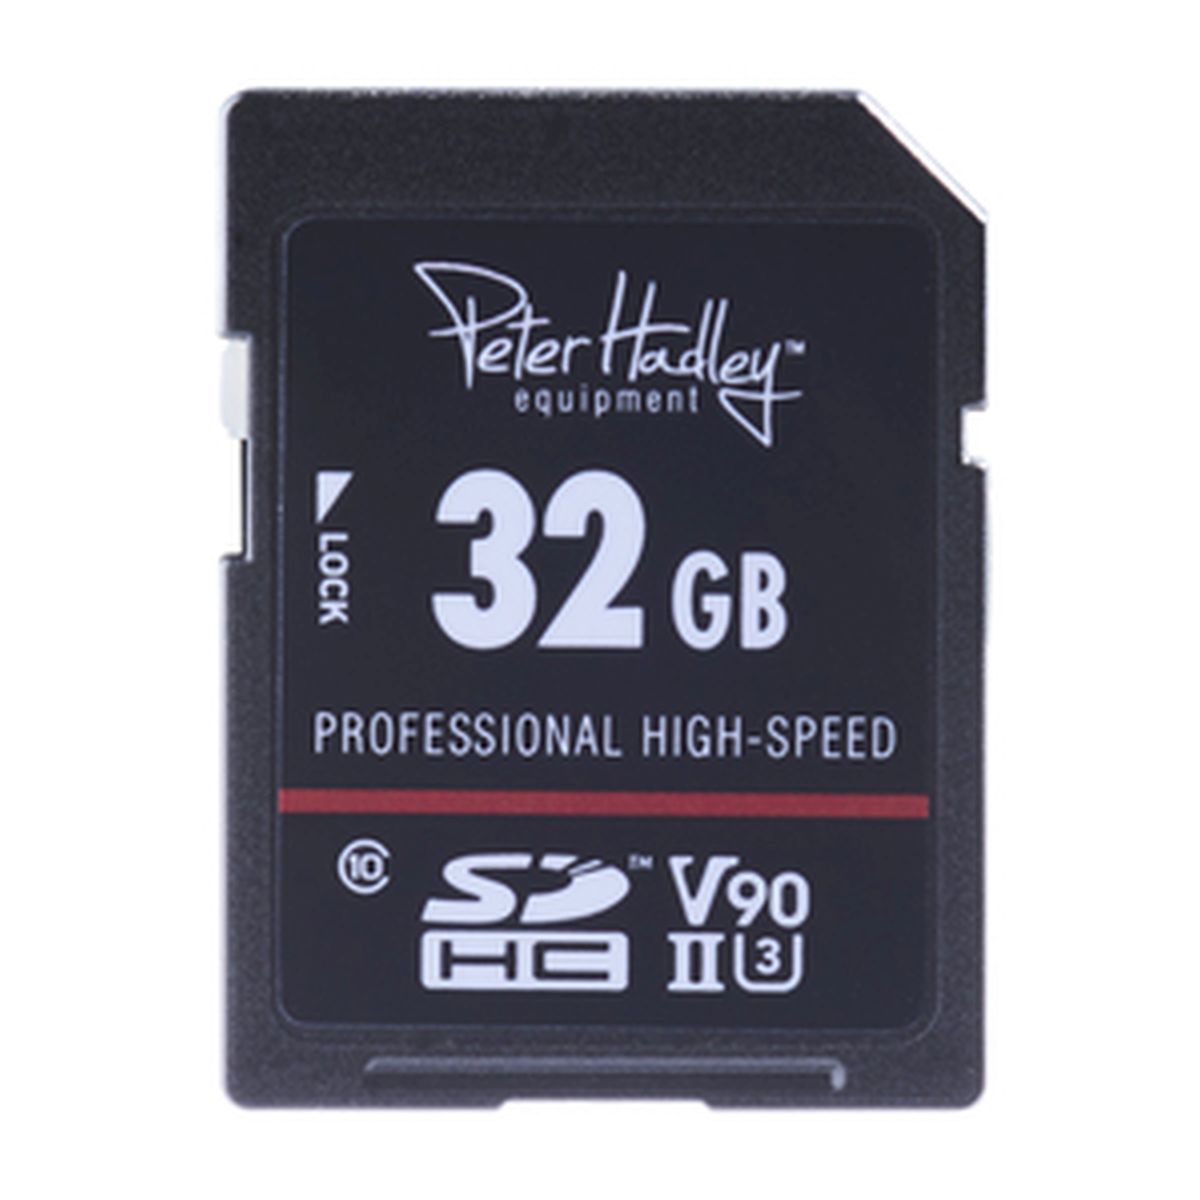 Peter Hadley Prof. High-Speed 32 GB UHS-II SDHC-Karte Cl10, U3, V90 